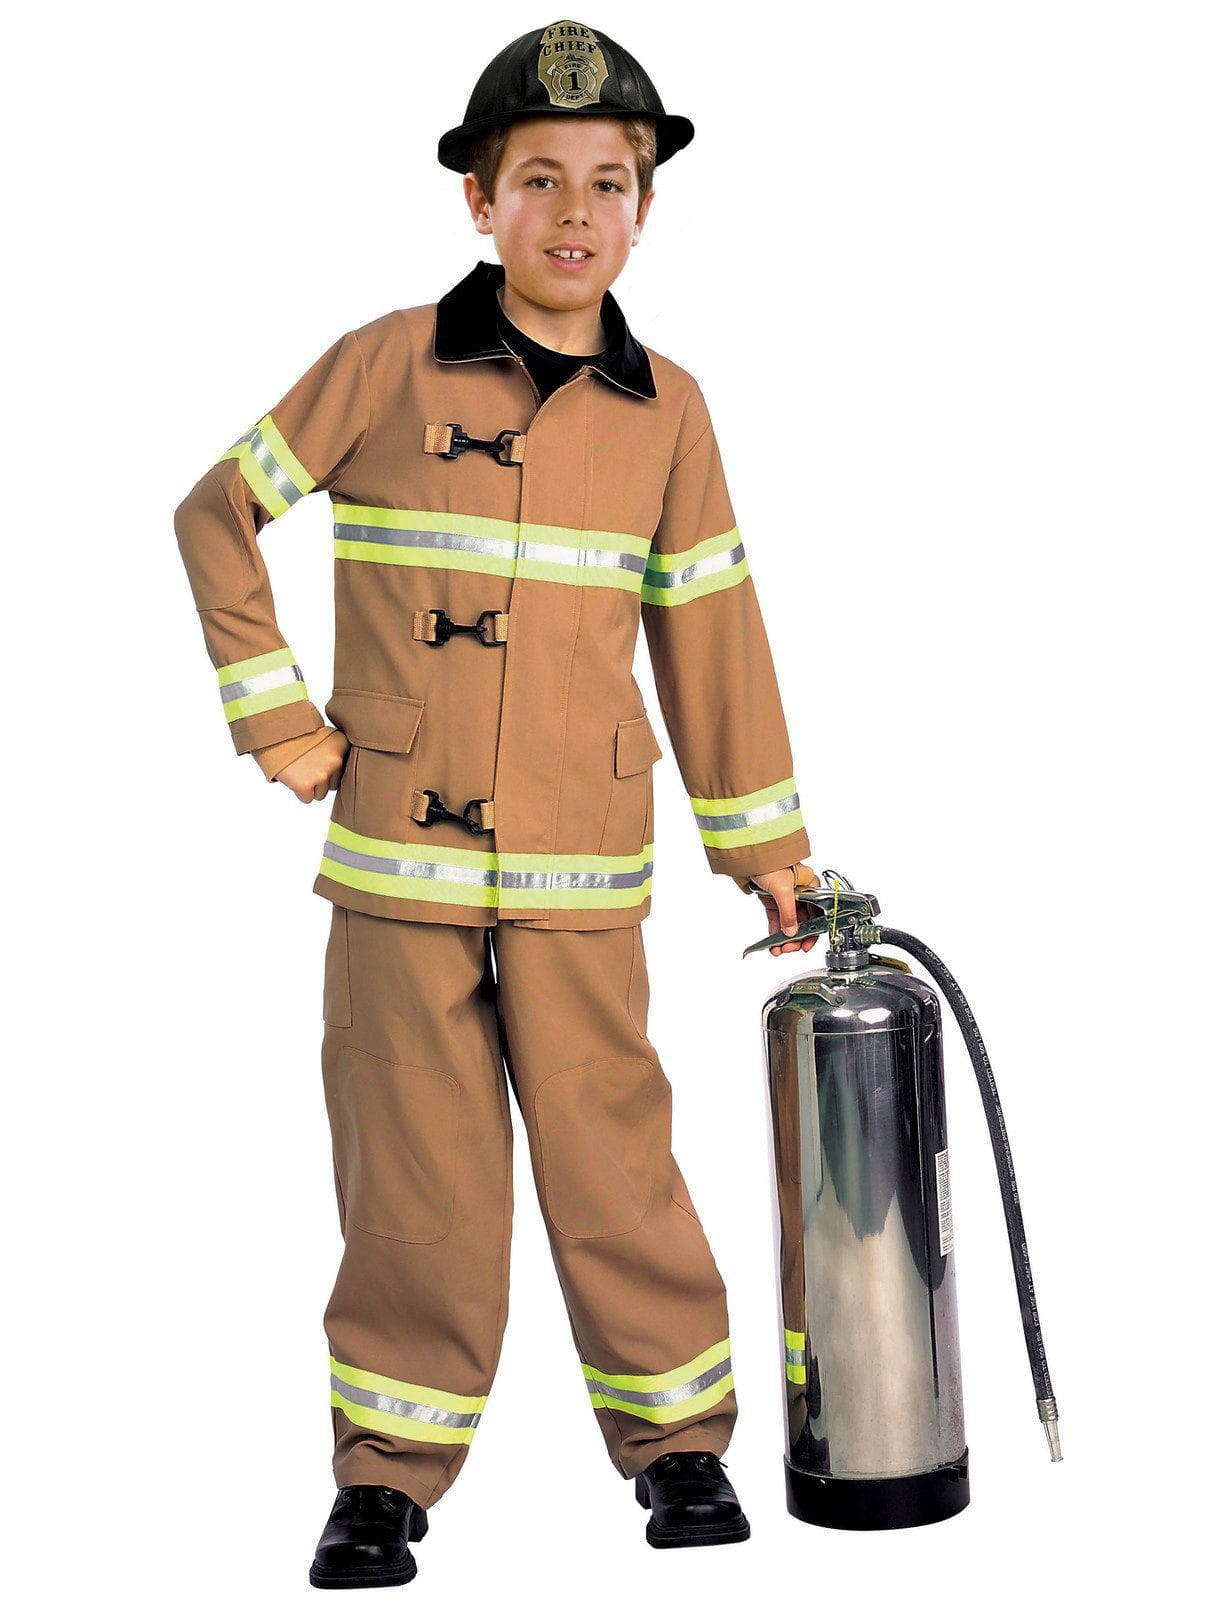 Kids Firefighter Costume - costumes.com